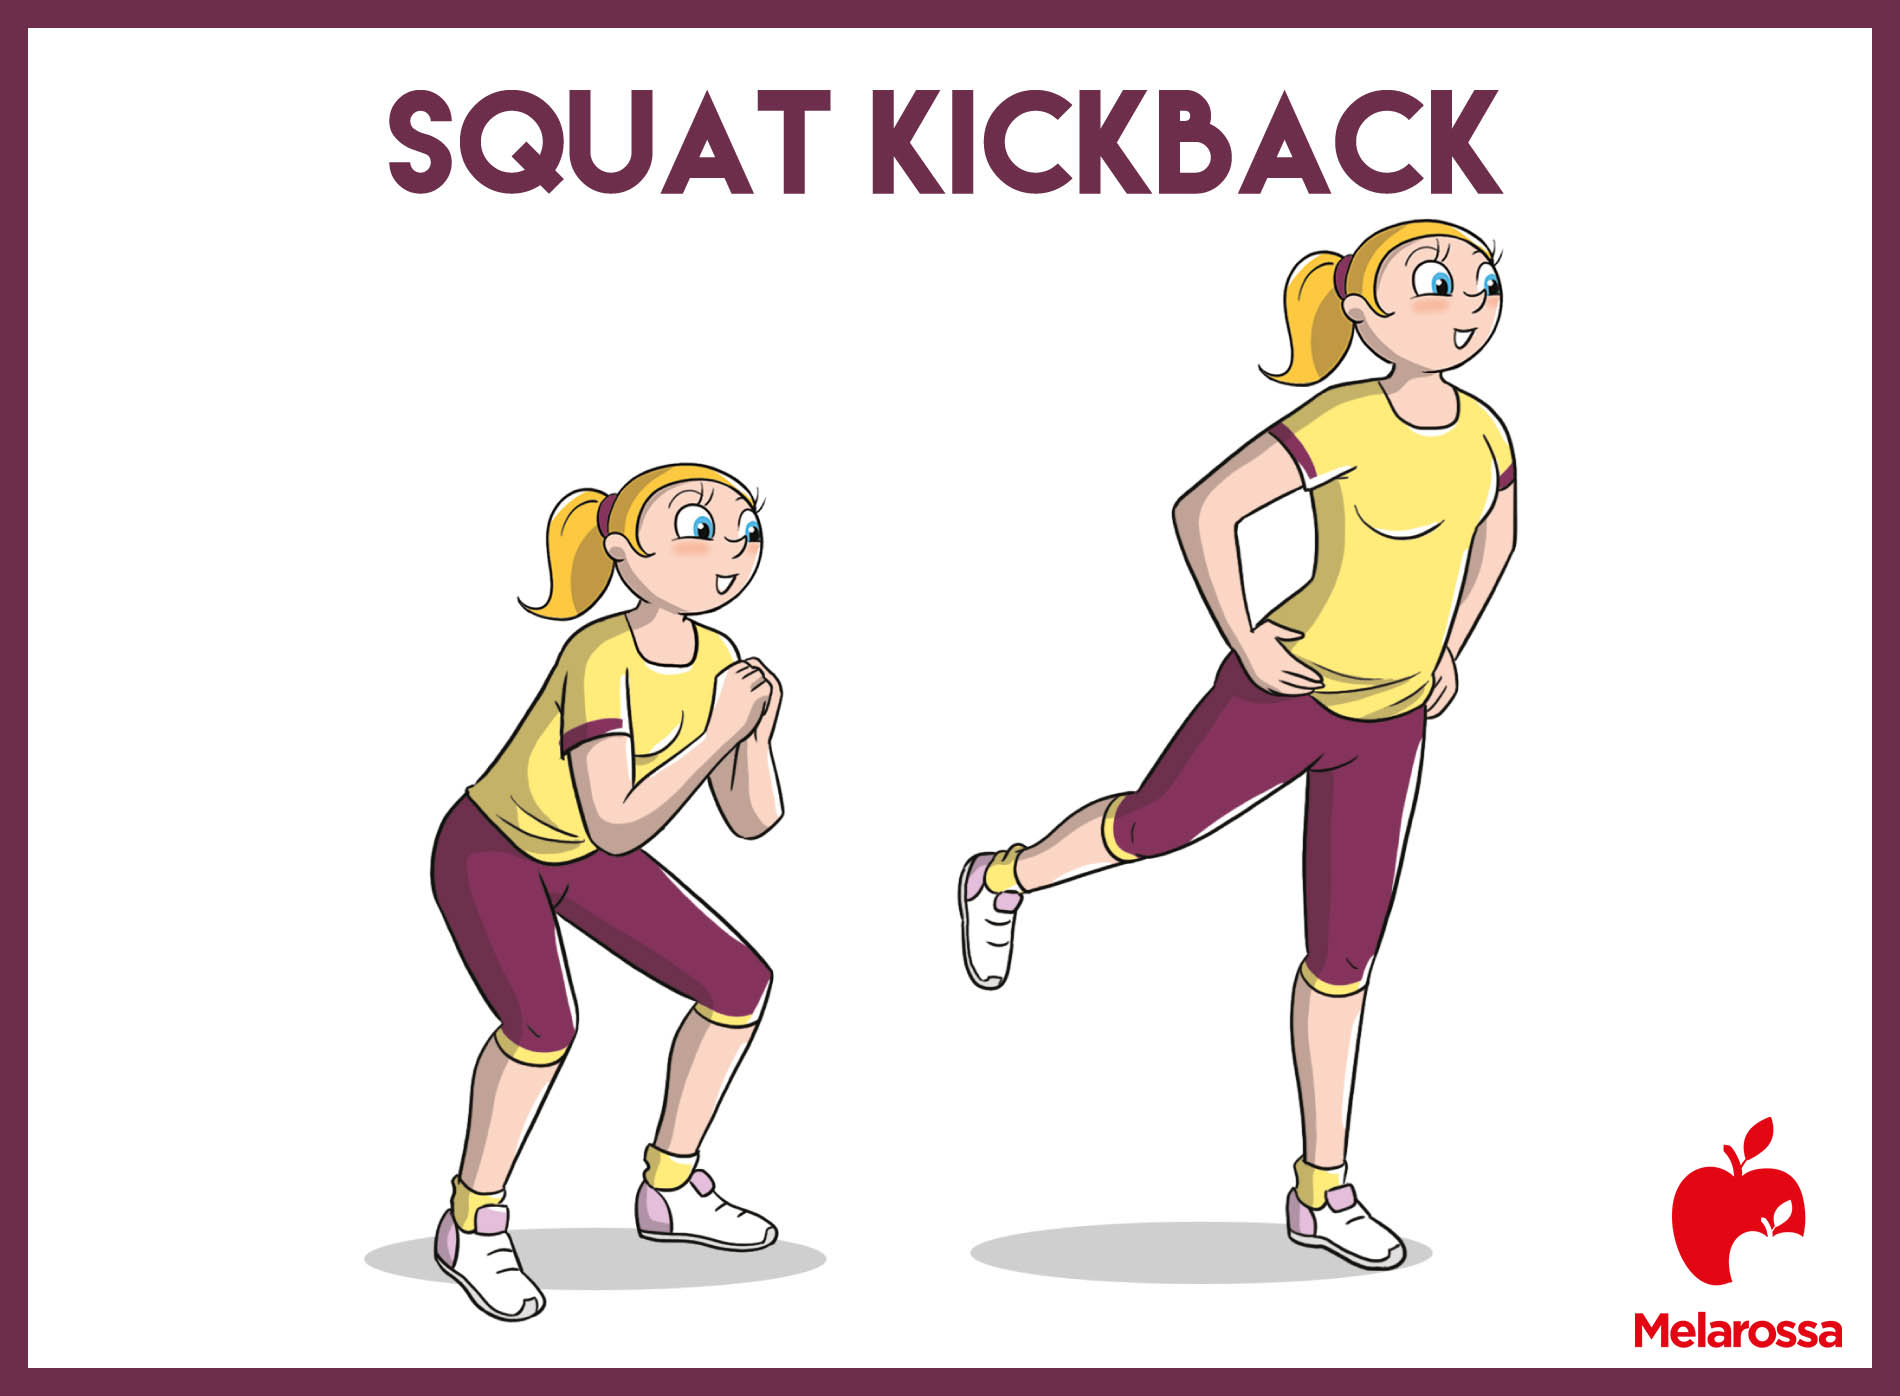 squat kickback: risveglio muscolare 